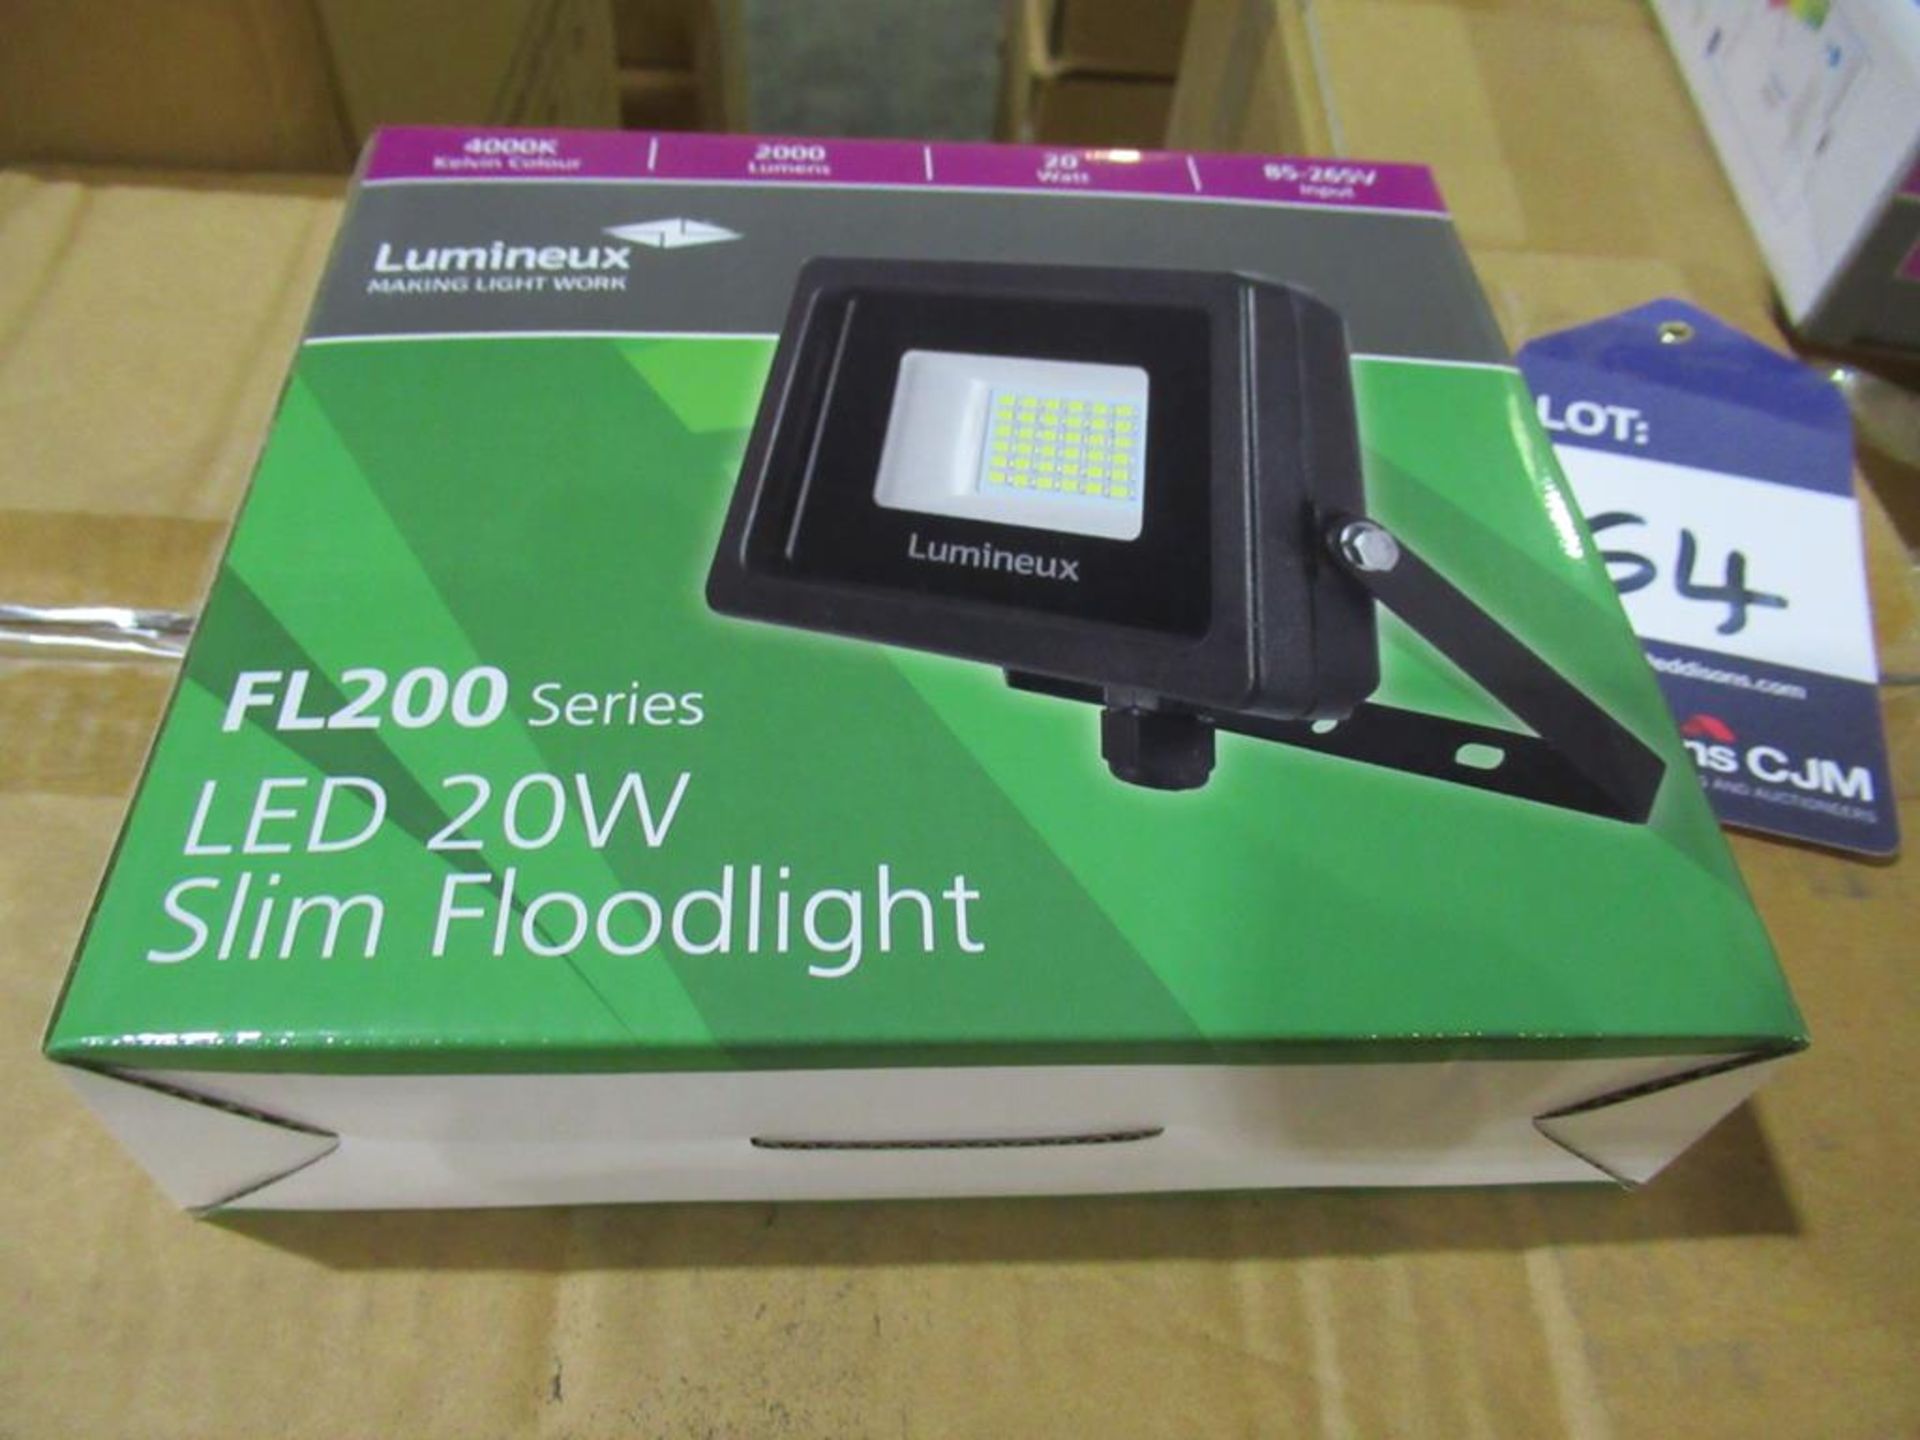 40 x LED 20W Slim Floodlight 4000K 85-265V OEM Trade Price £ 960 - Image 3 of 3